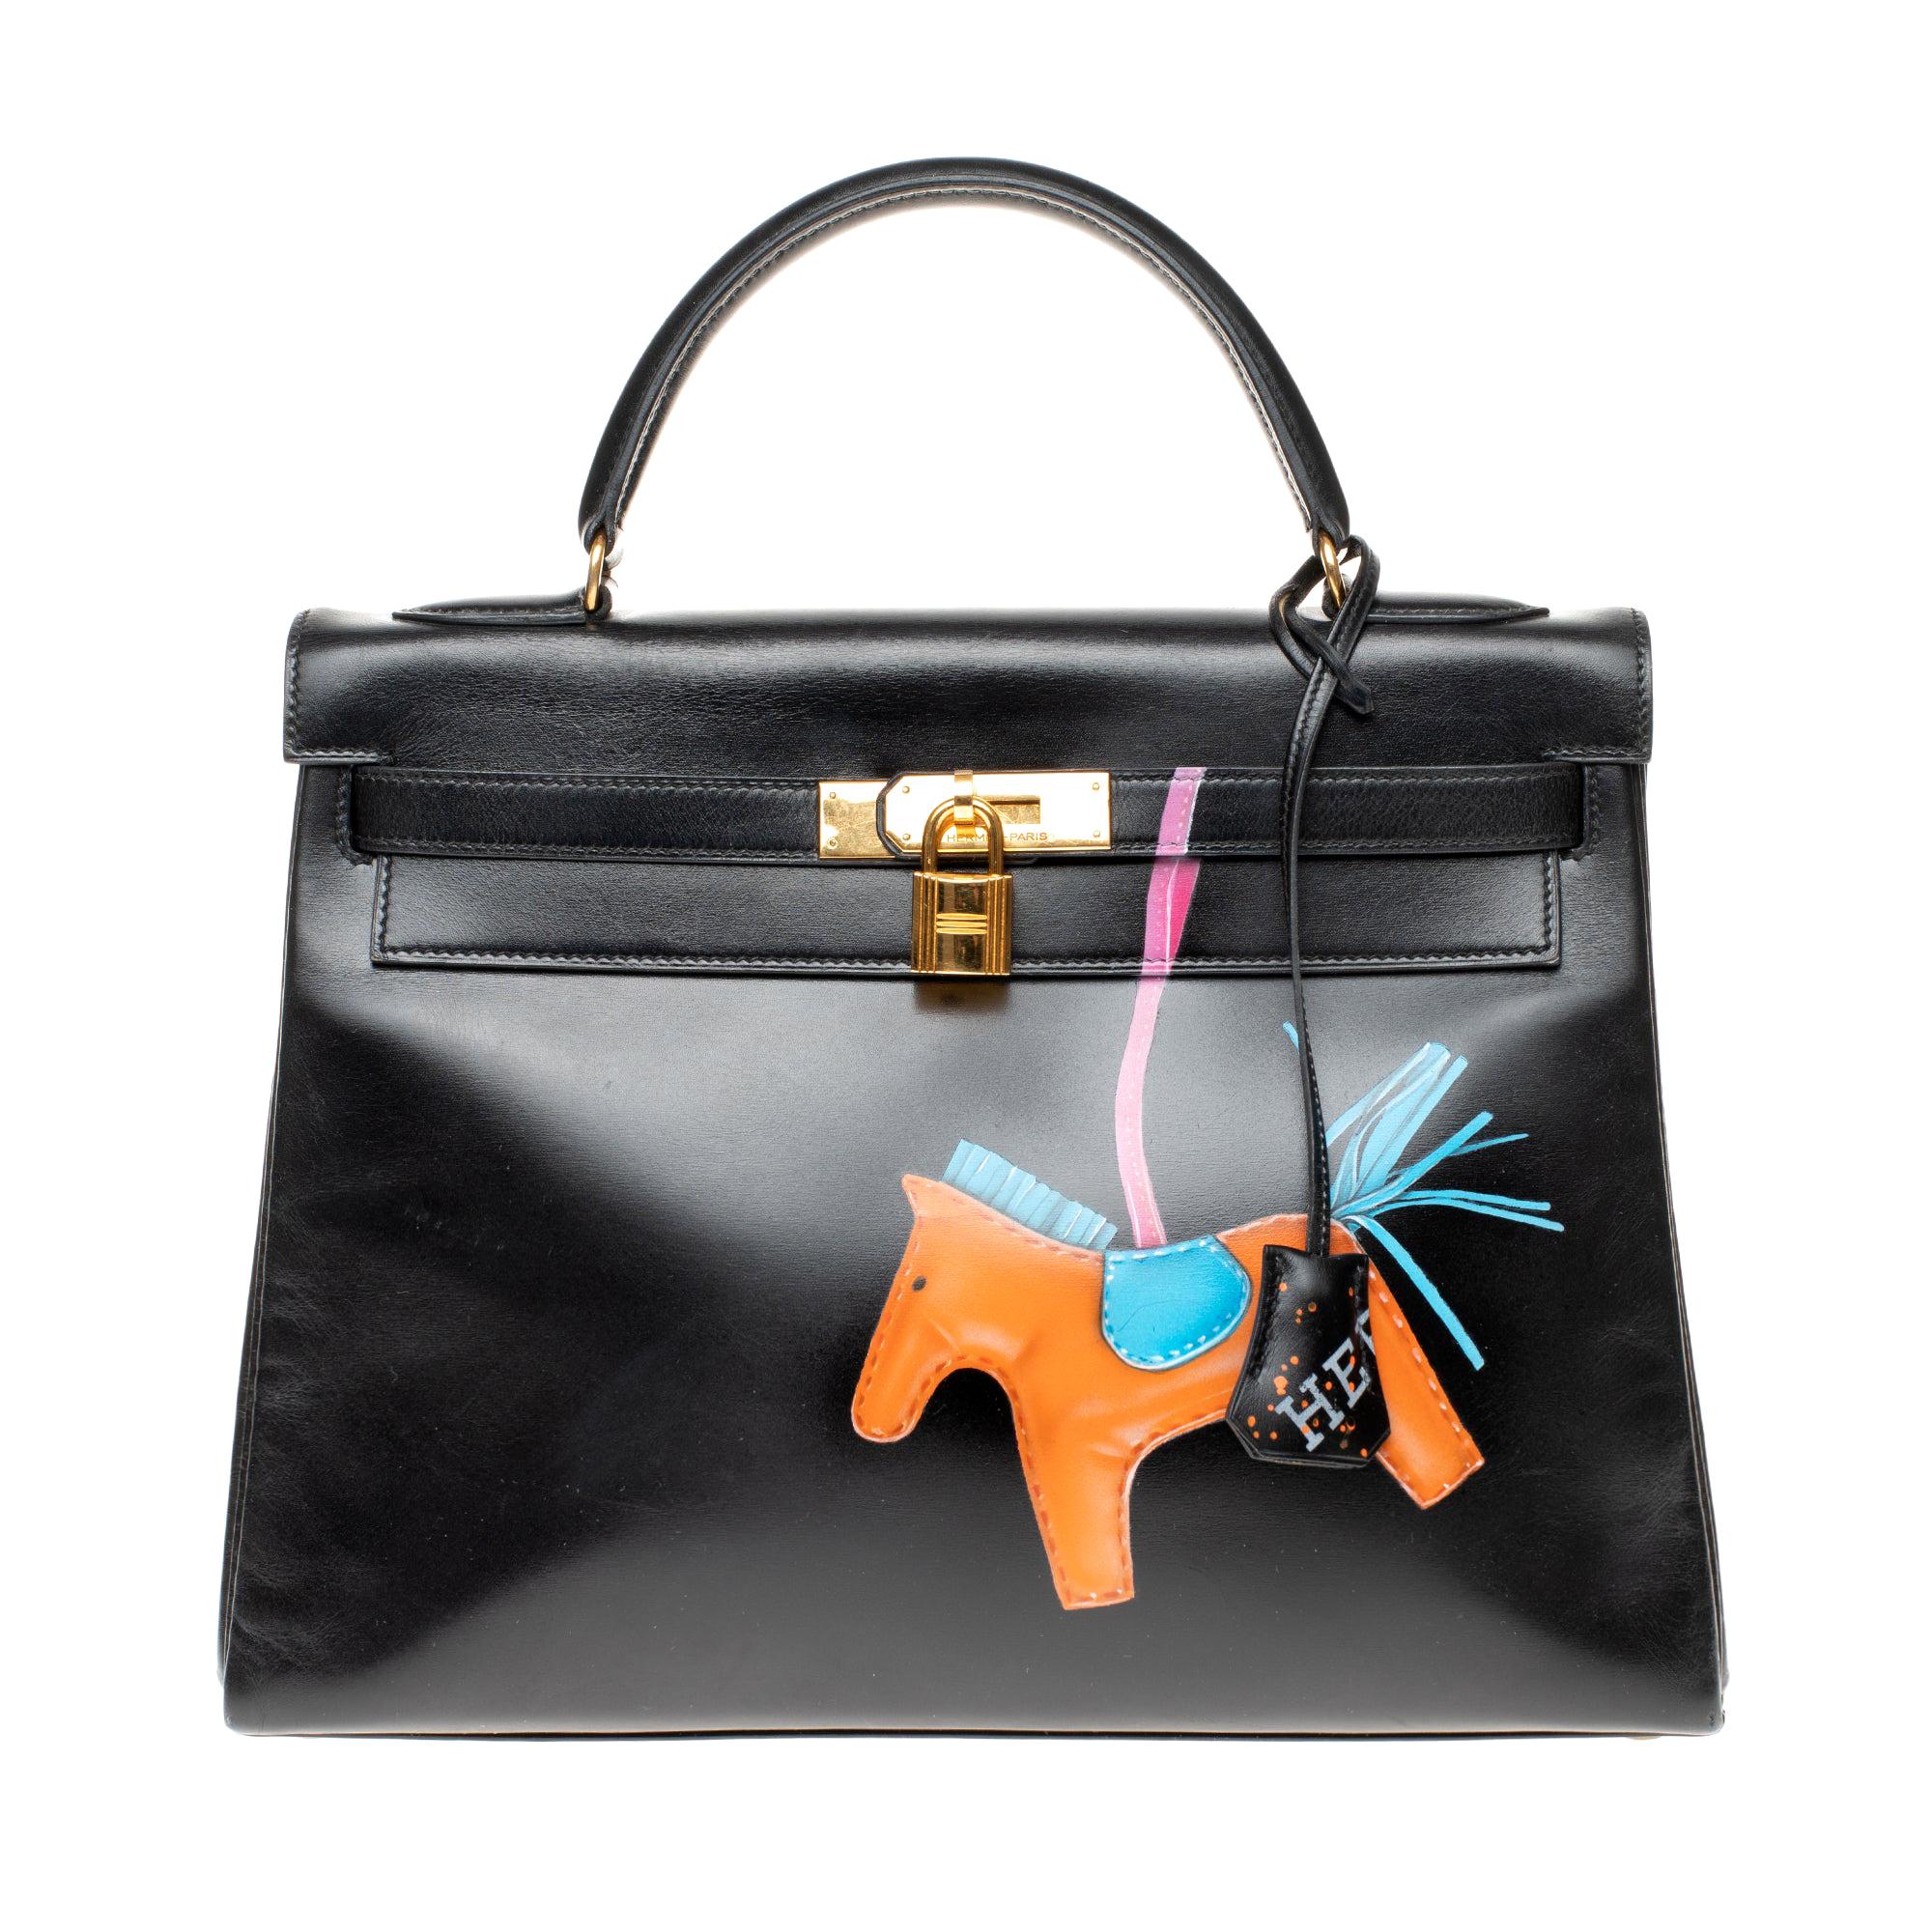 Stunning Creation Kelly 32 "Rodeo" handbag in black calfskin , gold hardware